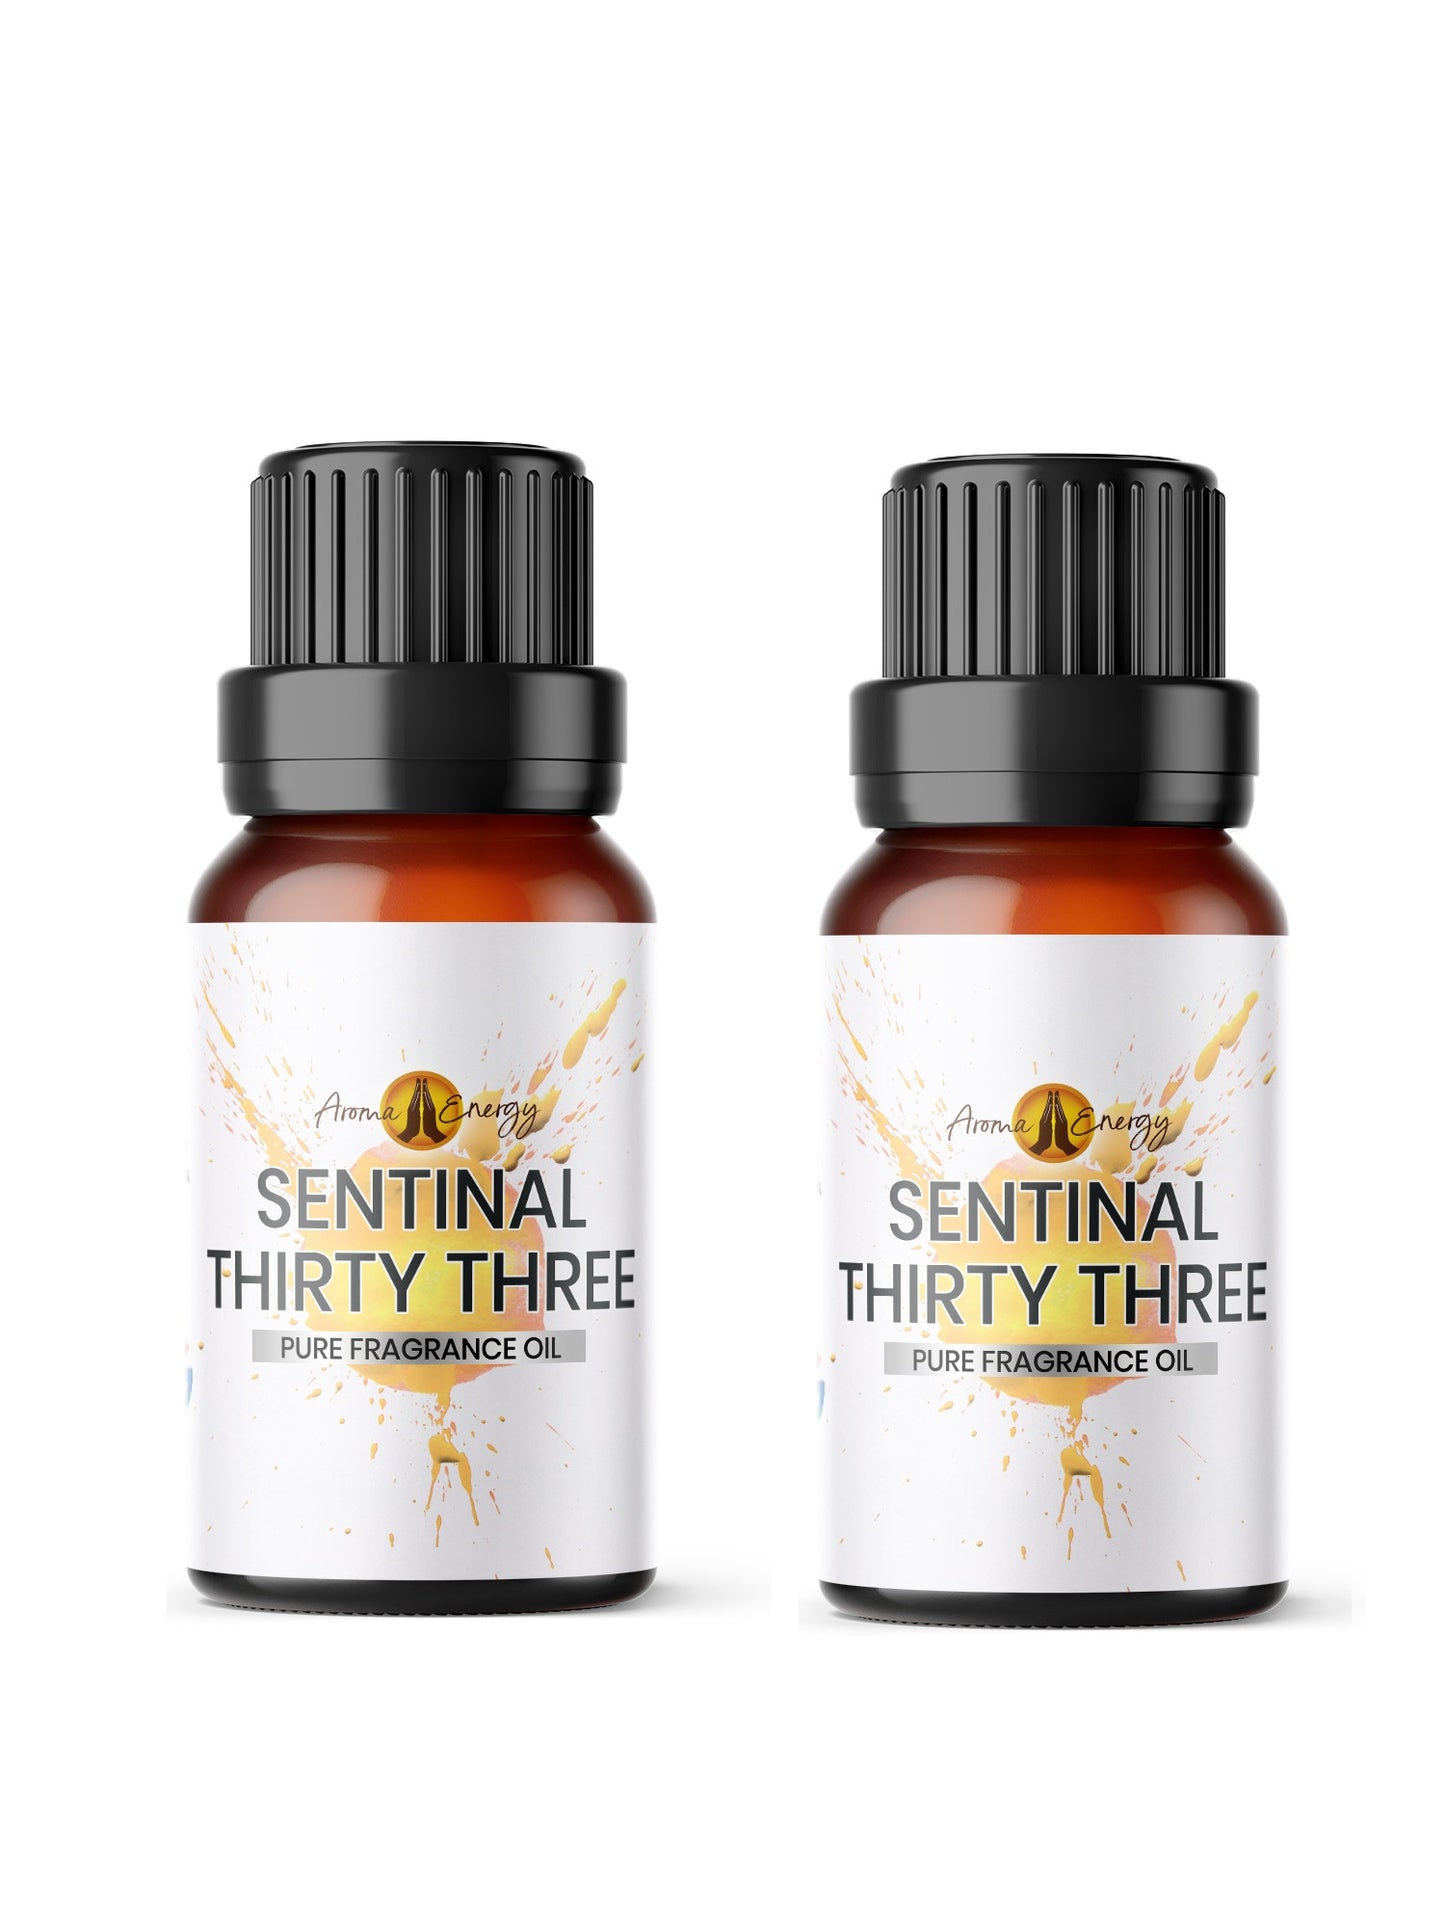 Sentinal Thirty Three Designer Fragrance Oil